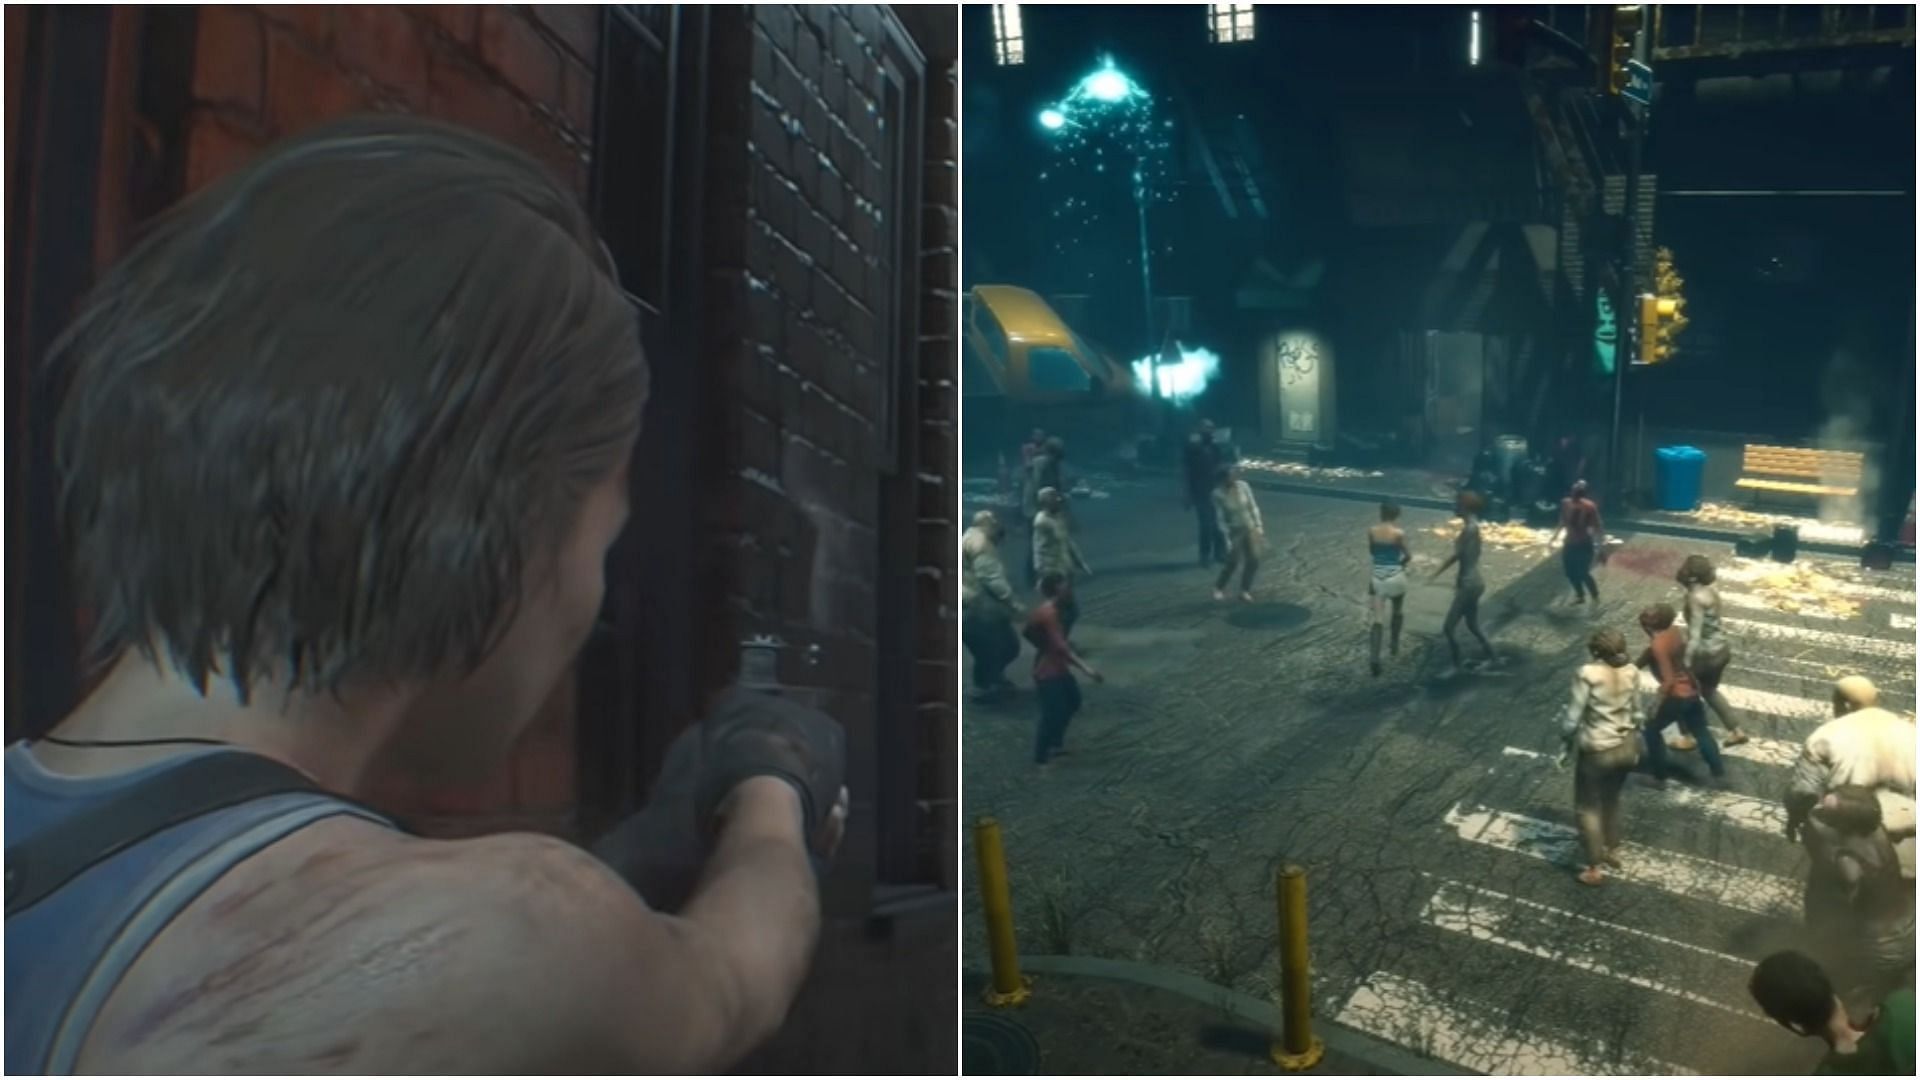 Resident Evil 3 Remake - Ps4  Jogo de Computador Resident Evil